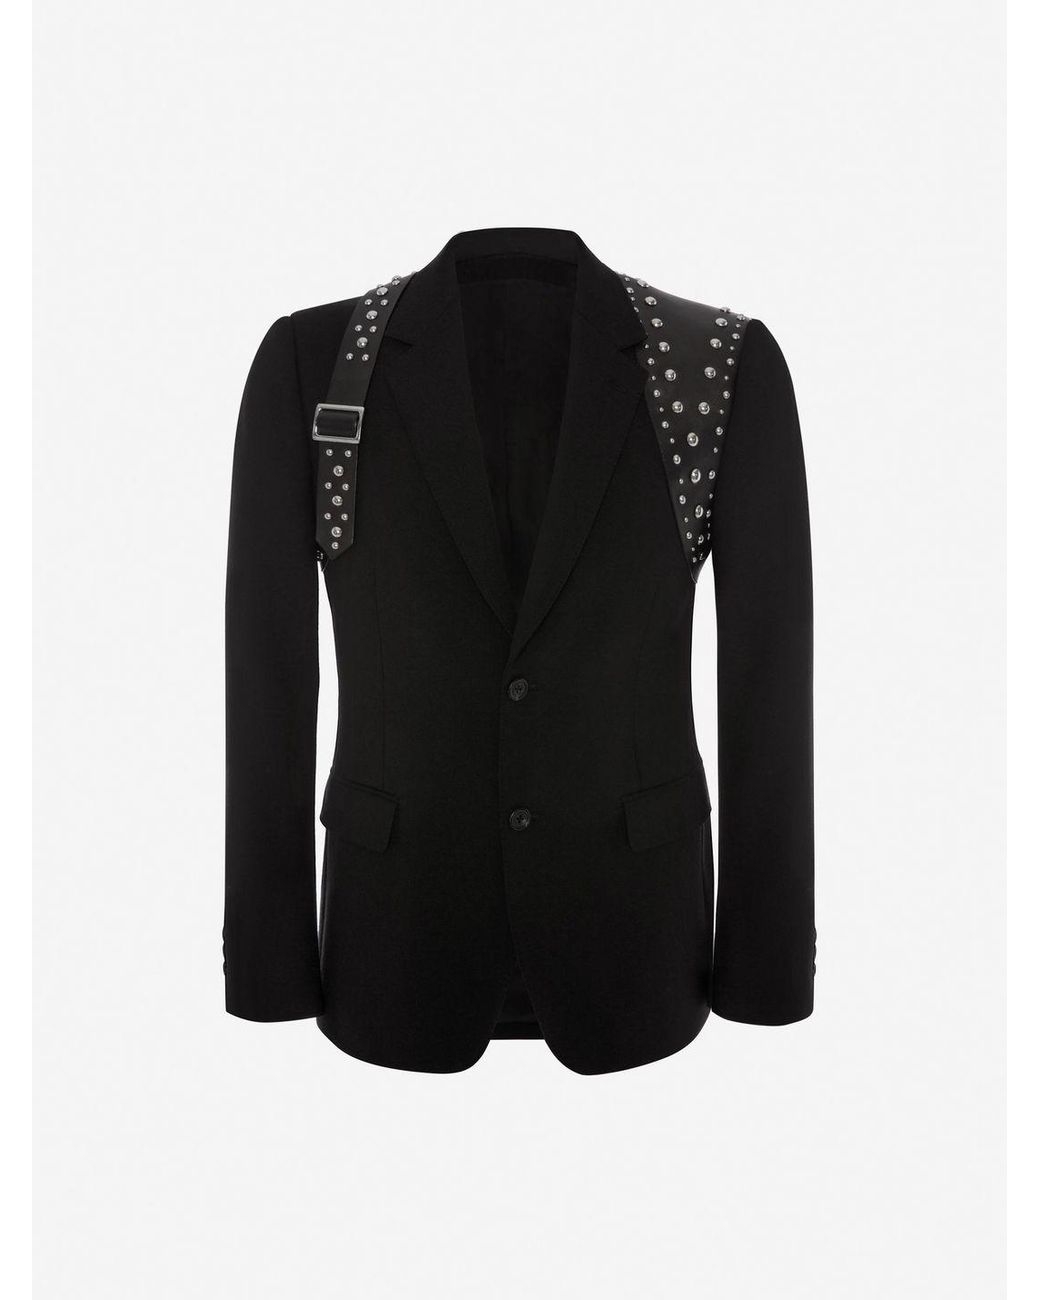 Alexander McQueen Studded Harness Jacket in Black for Men - Lyst